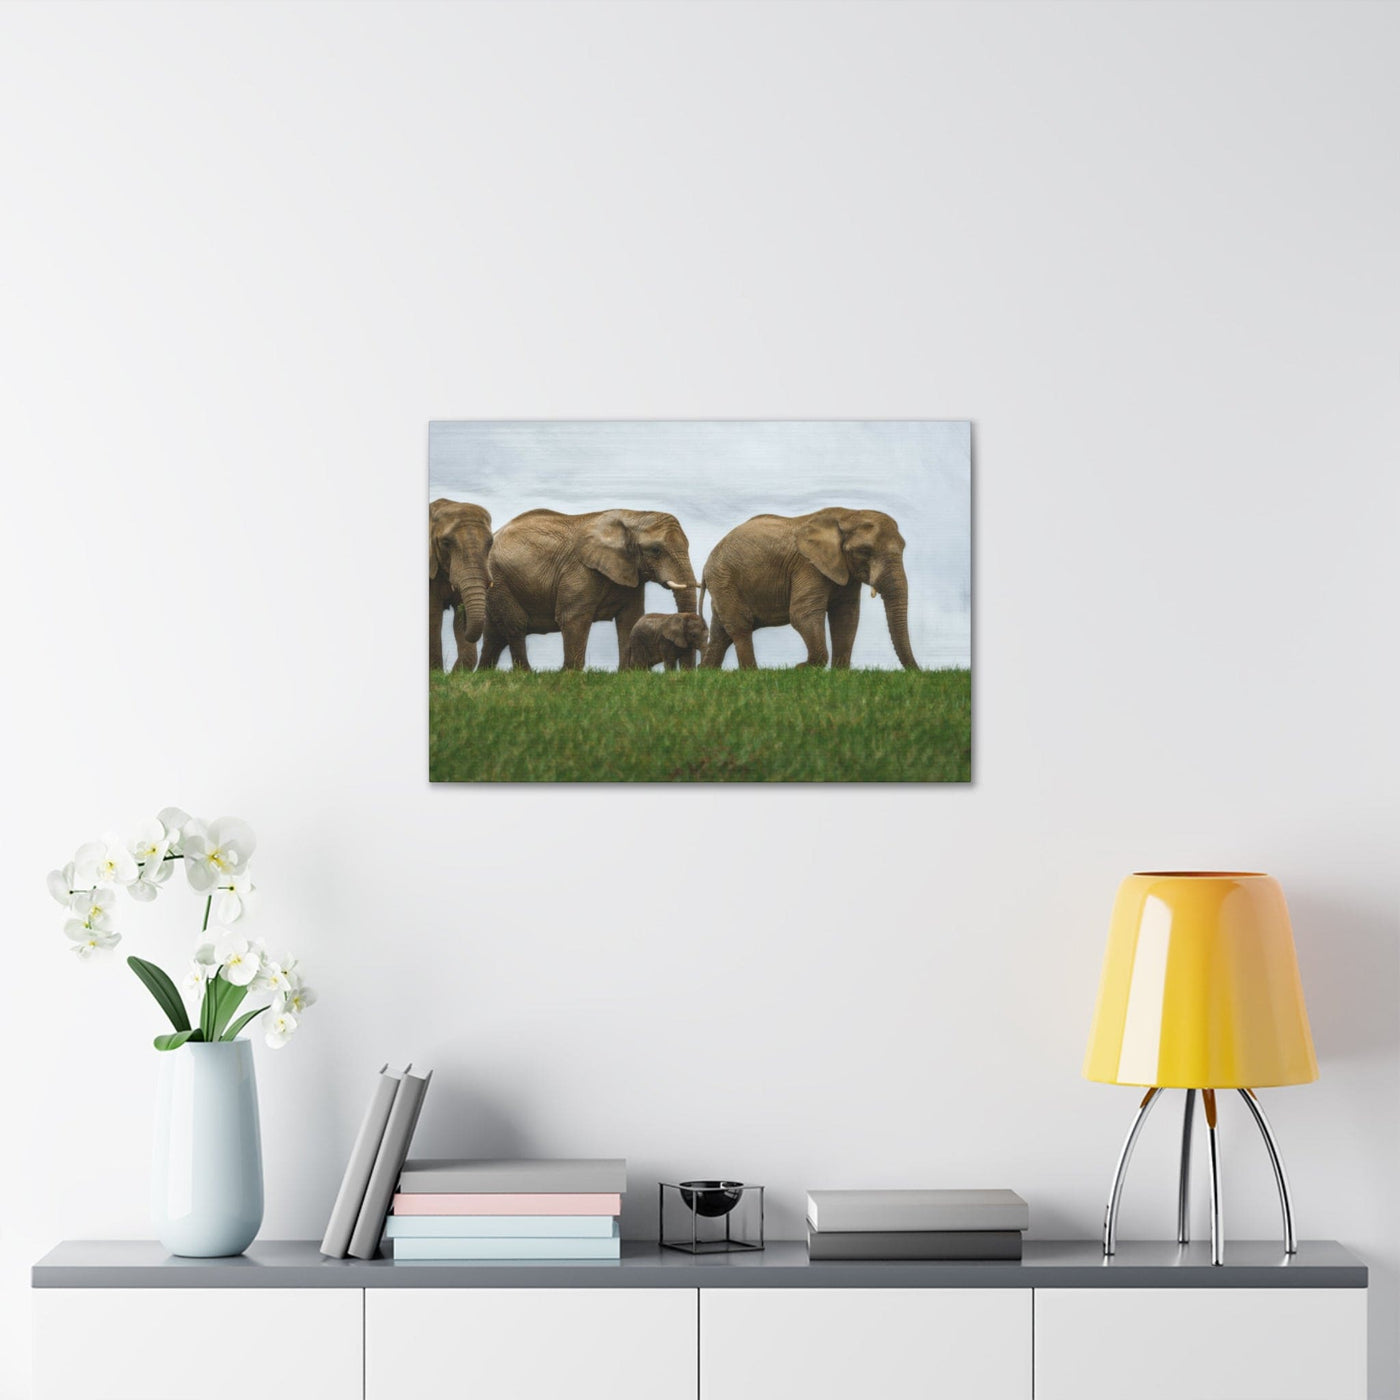 Wall Art Decor Canvas Print Artwork African Elephants Nature Safari Wildlife